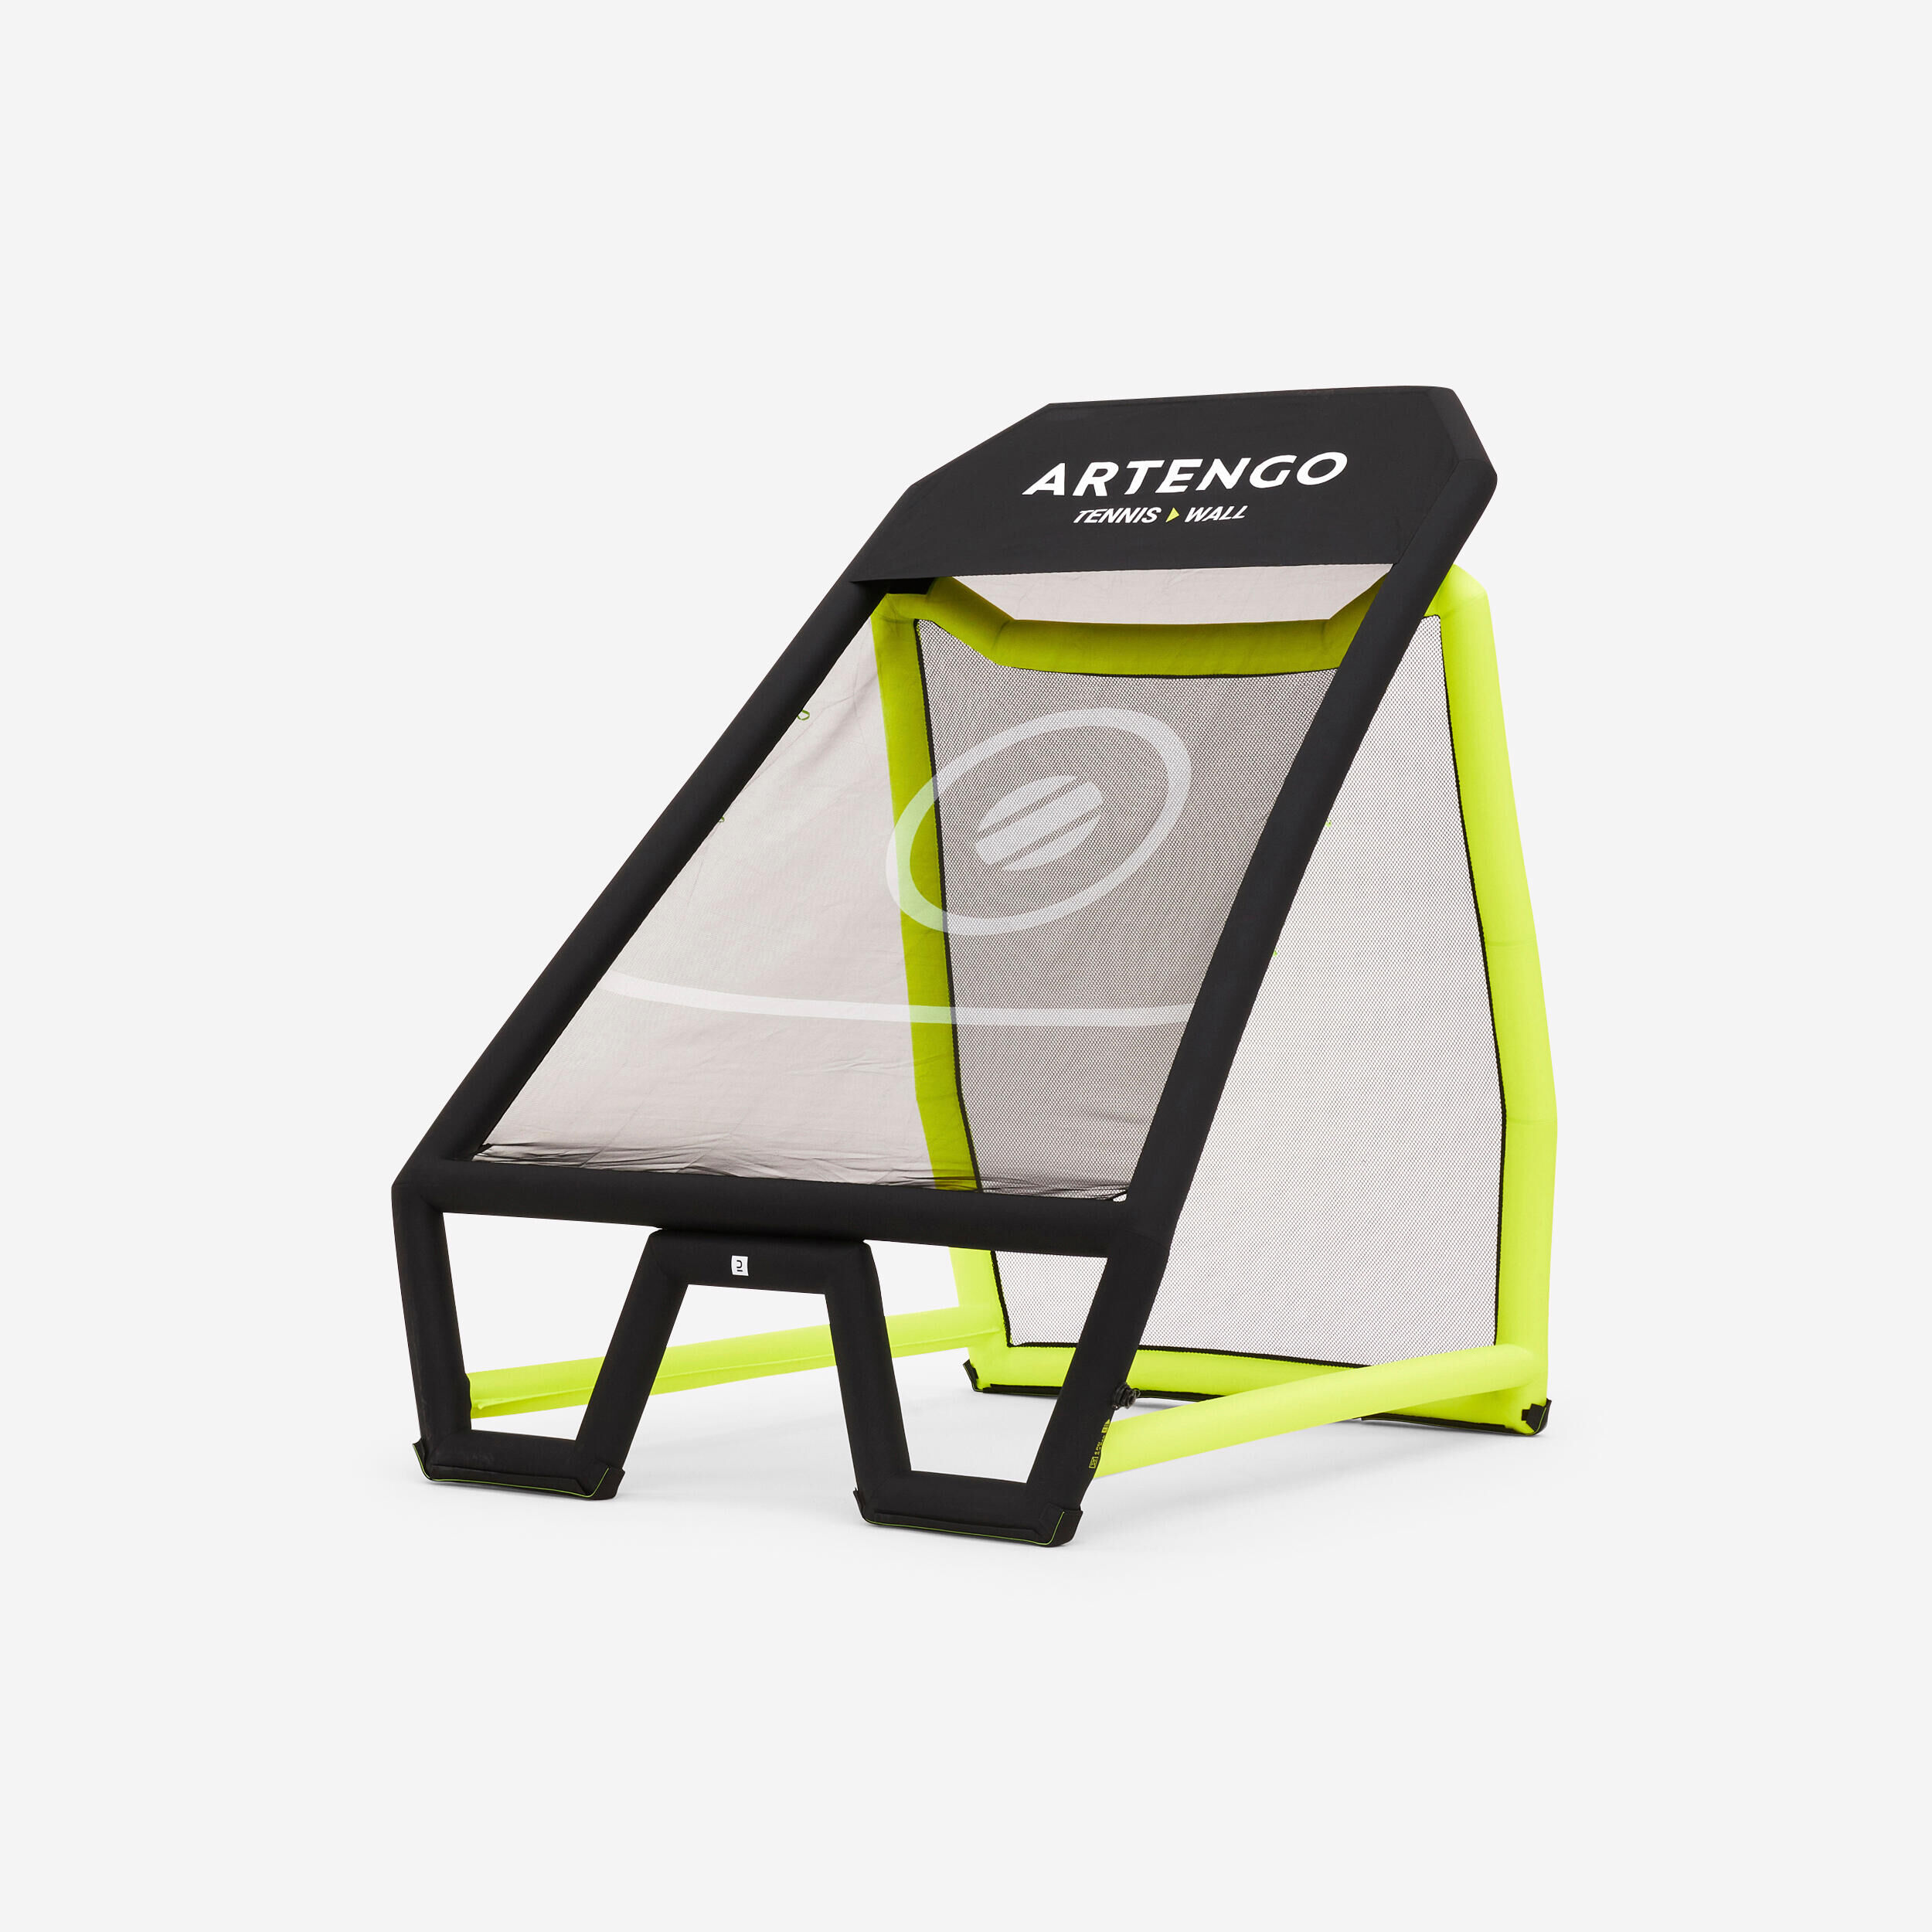 ARTENGO Compact Two-Sided Tennis Training Wall - Black/Yellow